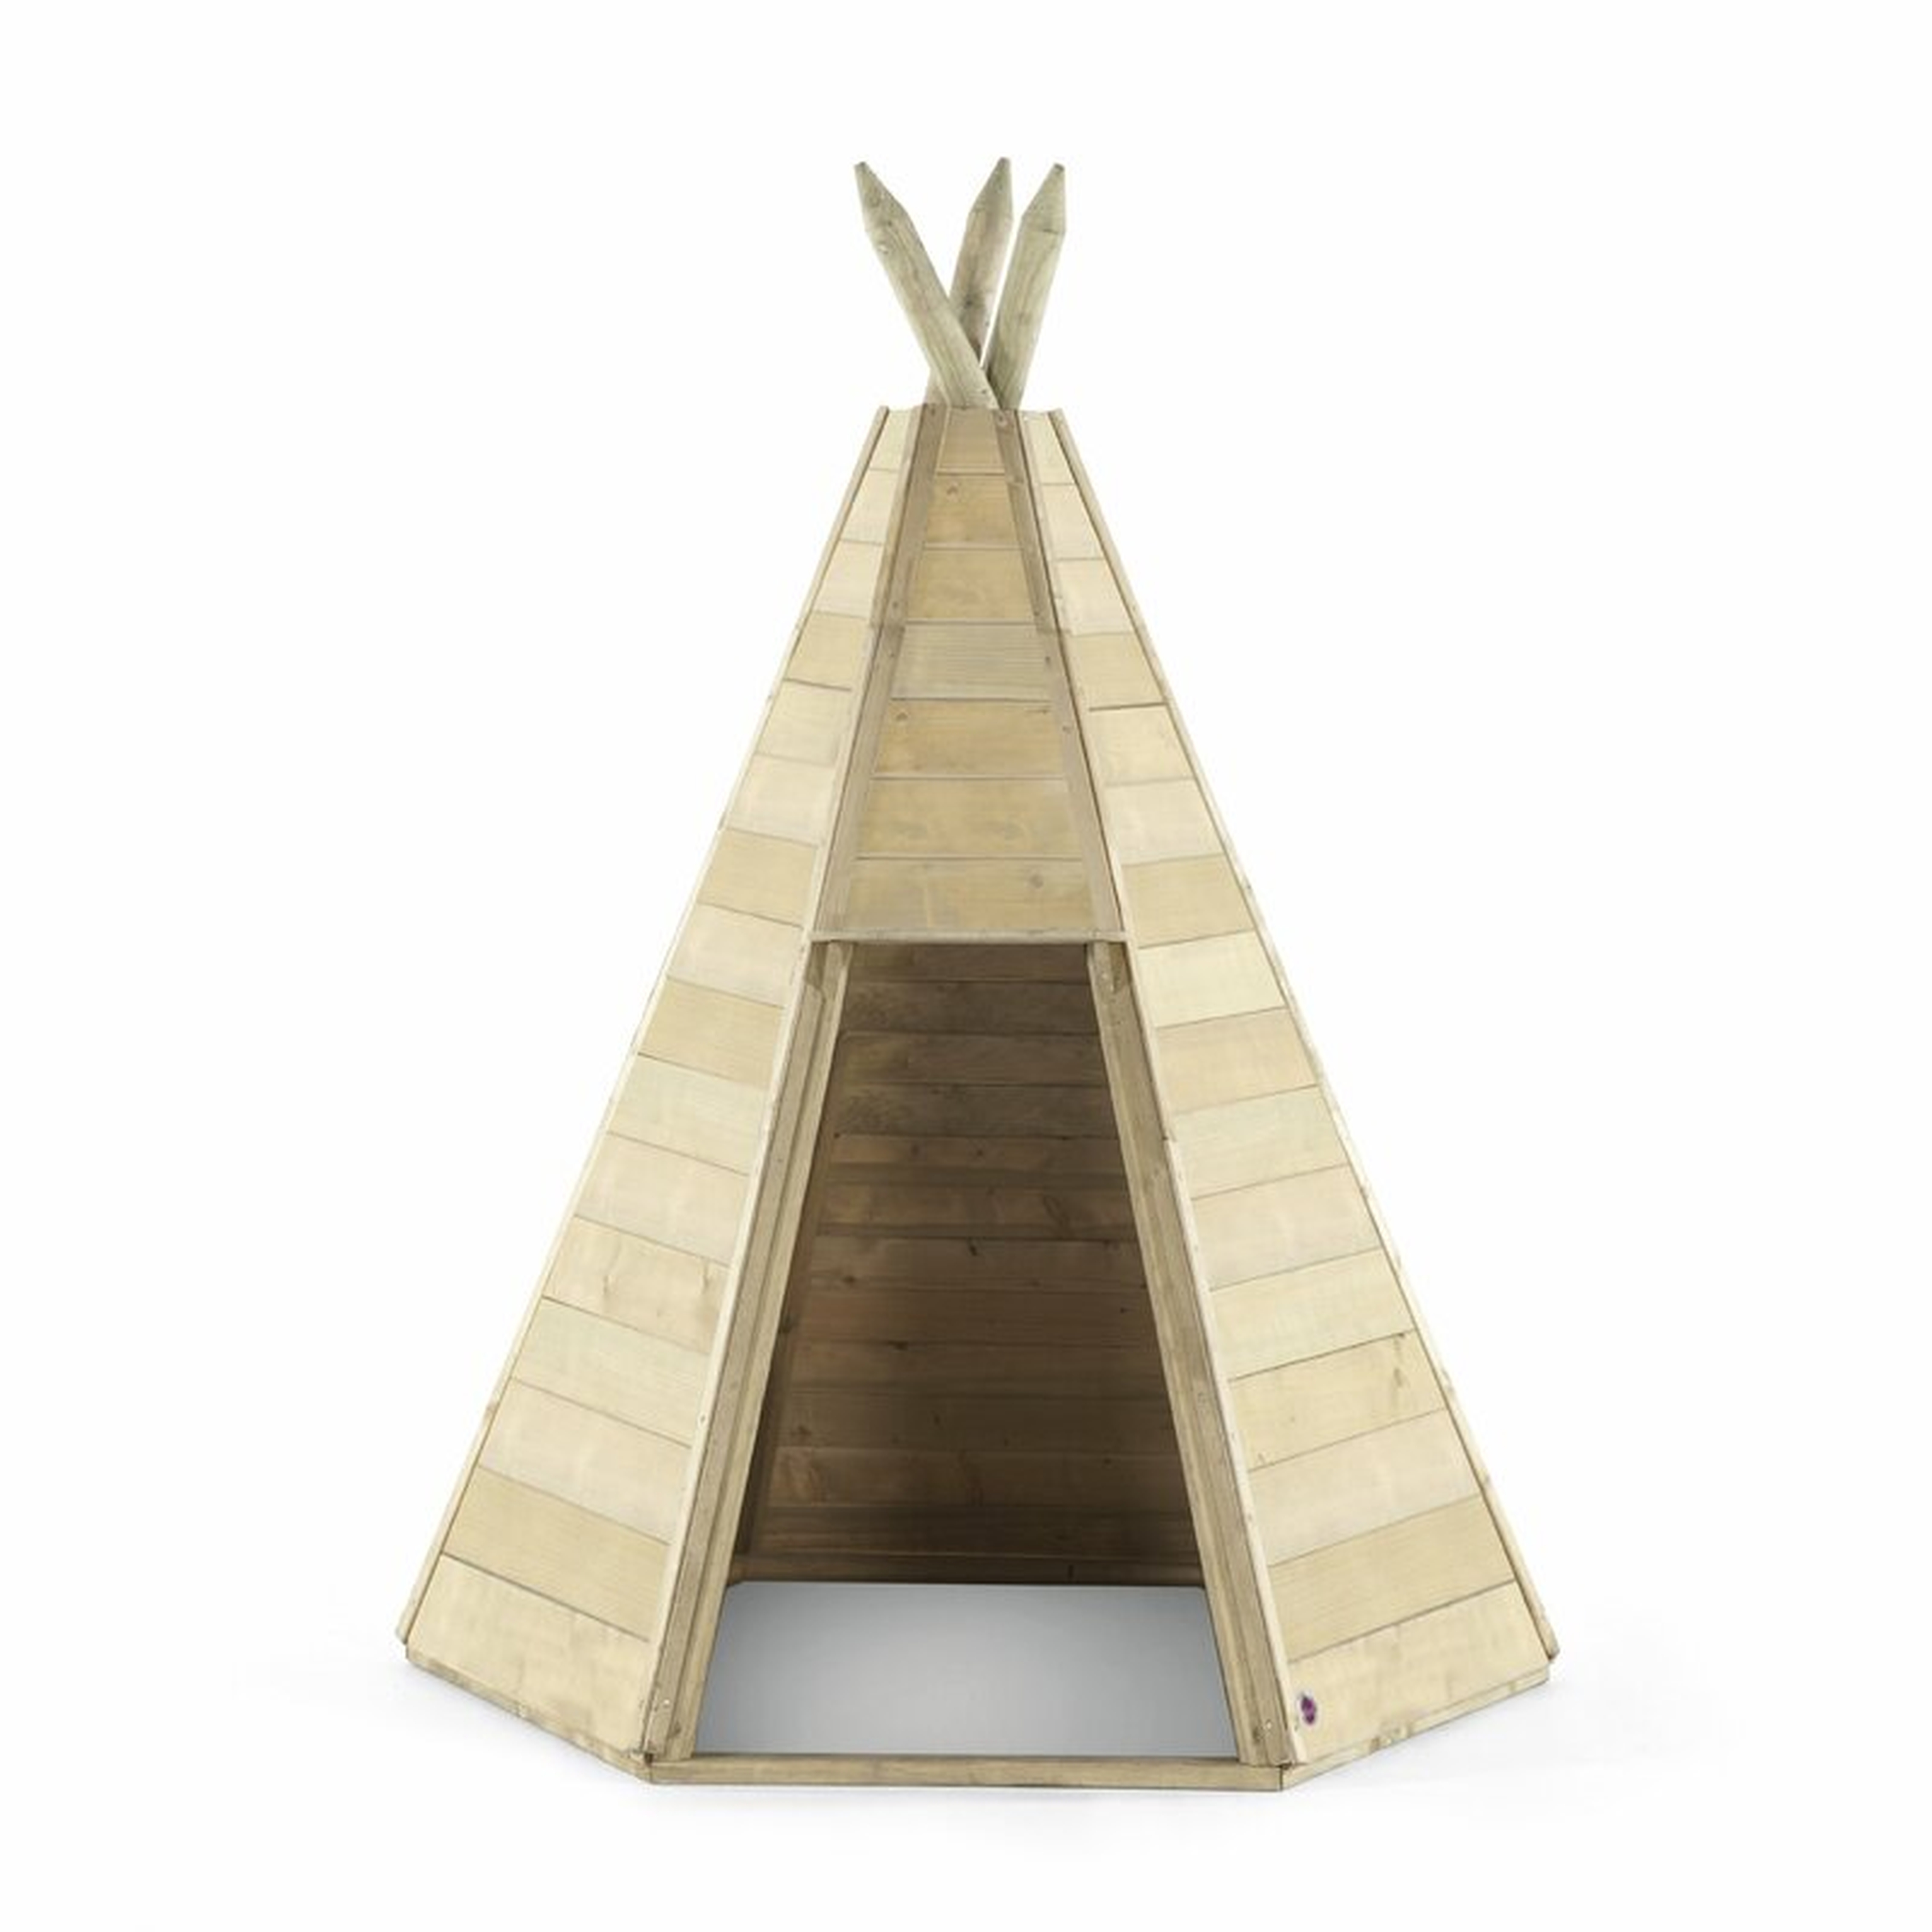 Solid Wood Triangular Play Tent - Wayfair